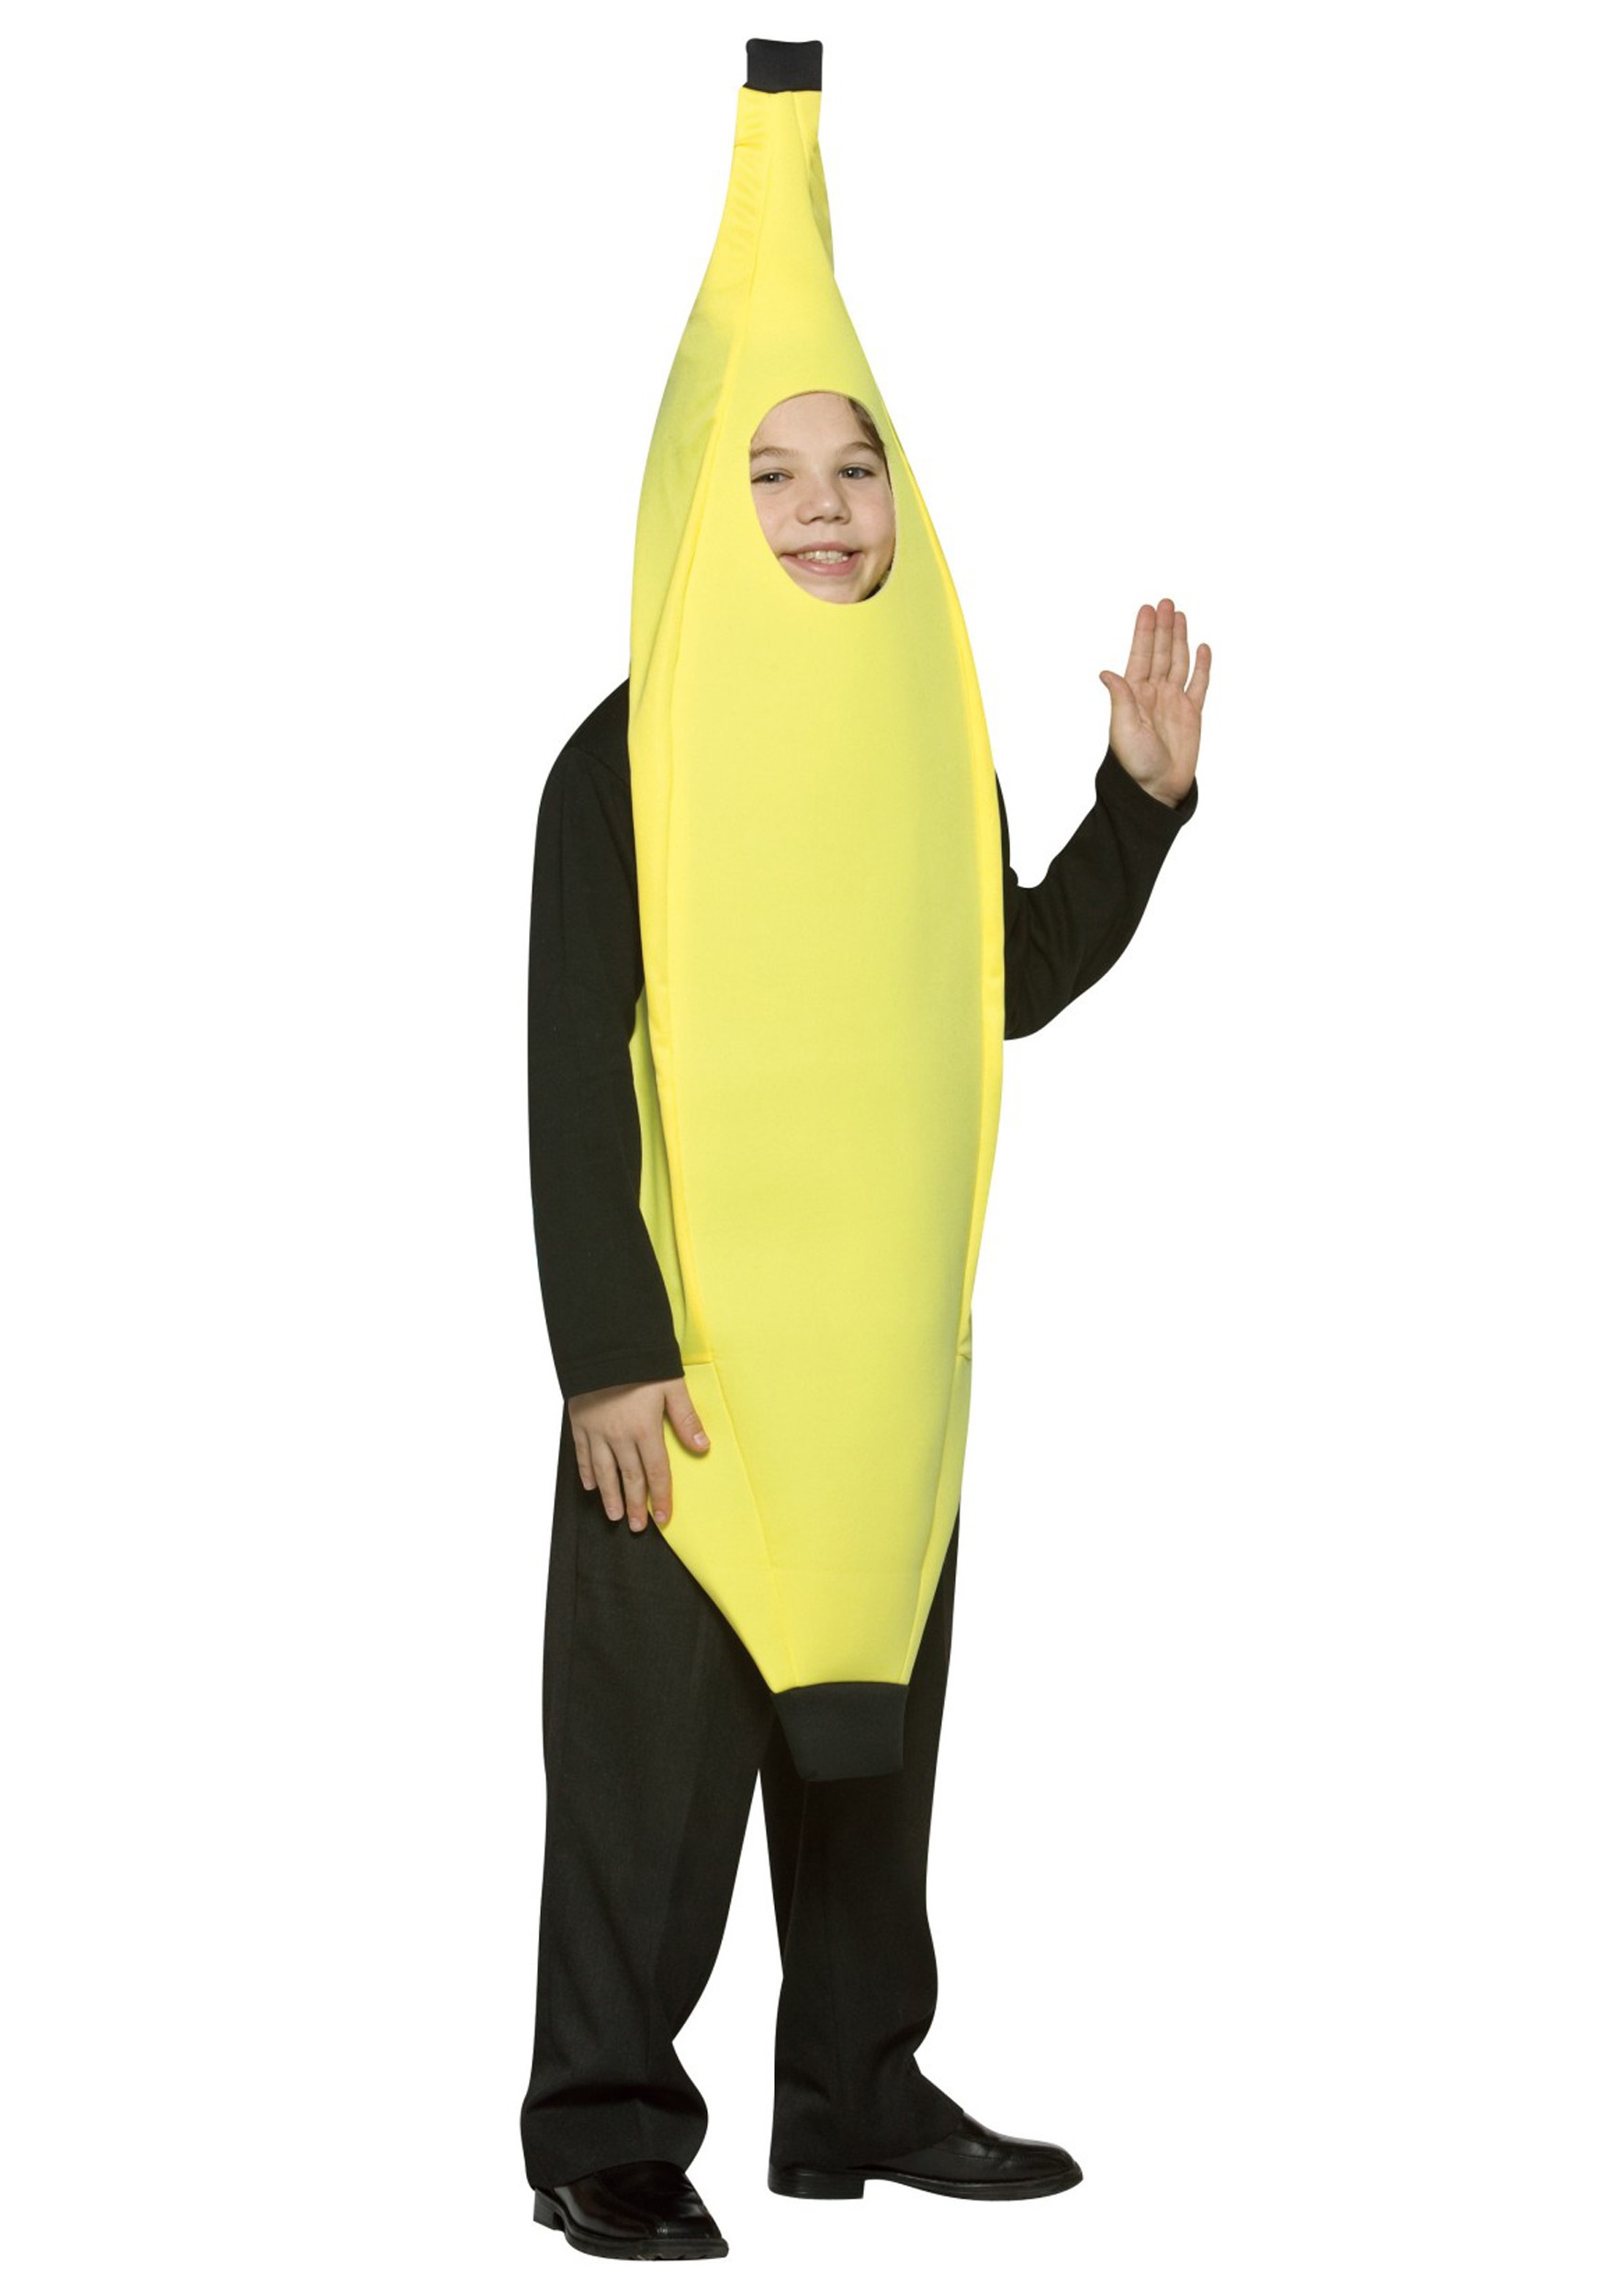 banana costume for baby